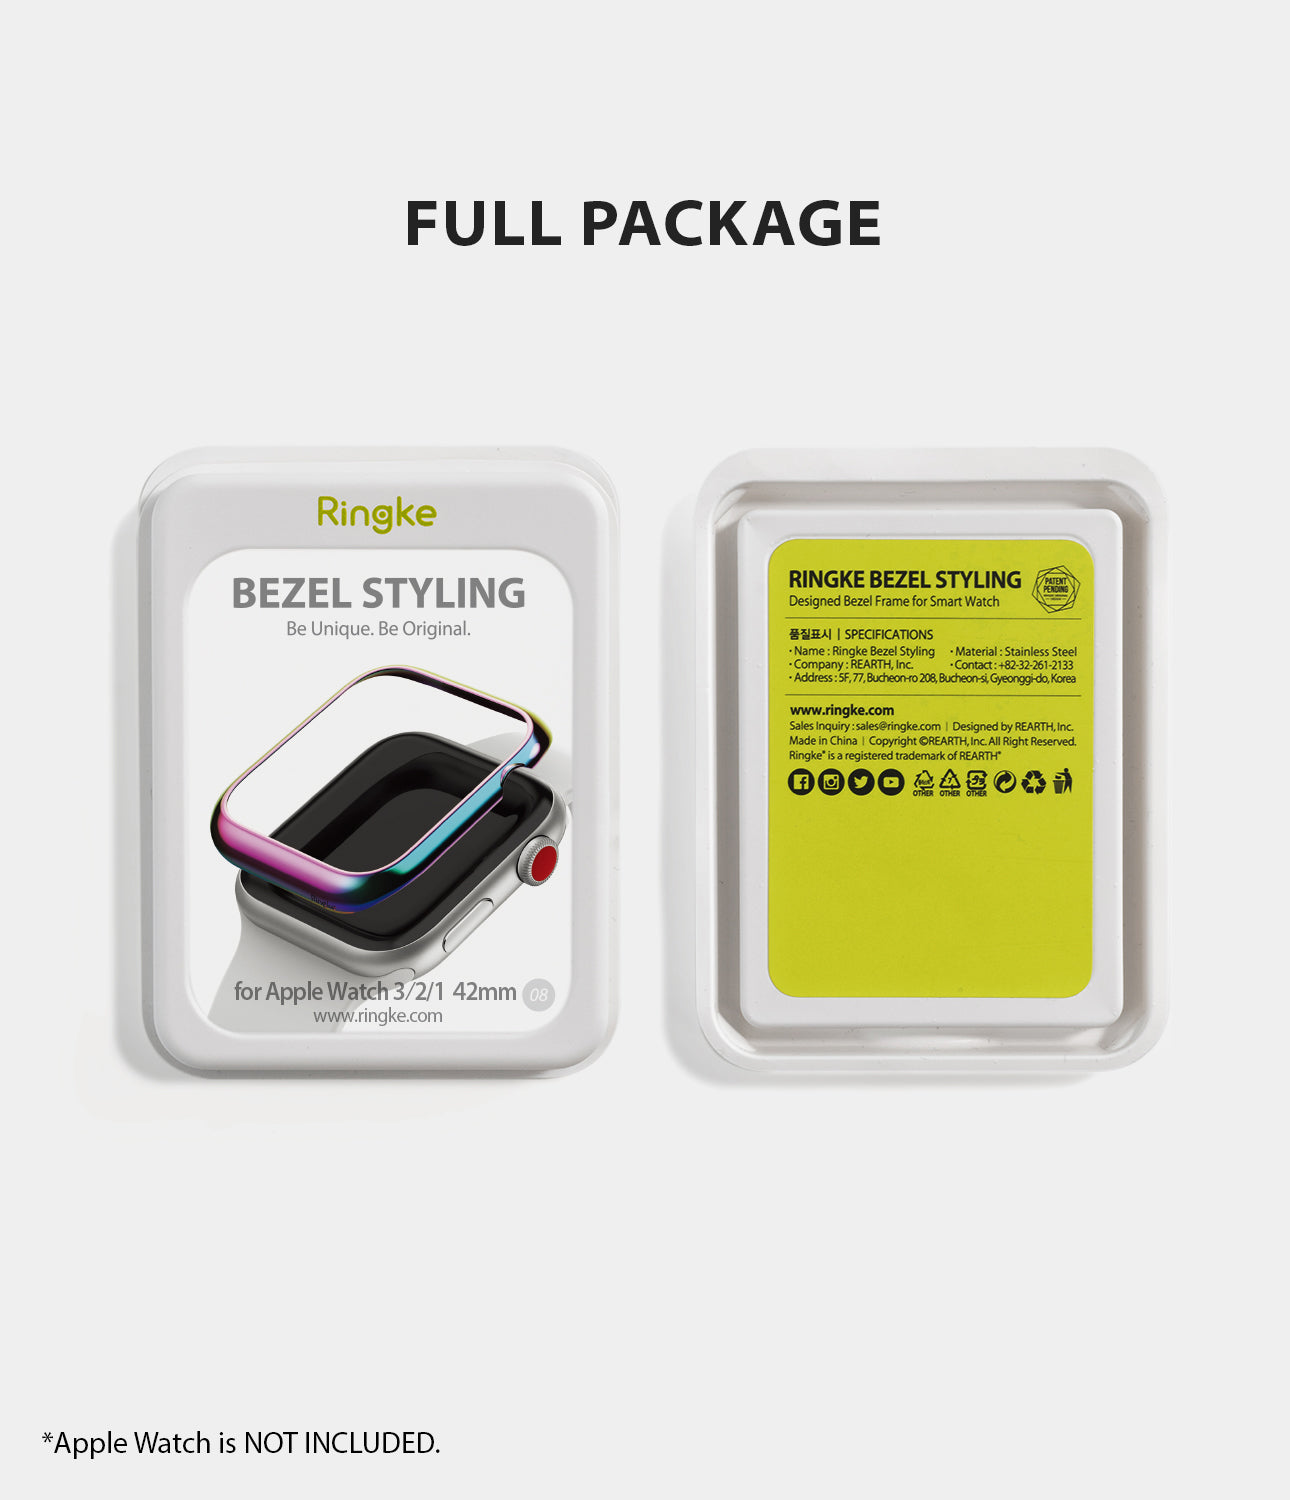 apple watch 3 2 1 42mm case ringke bezel styling stainless steel frame cover 42-08 full package